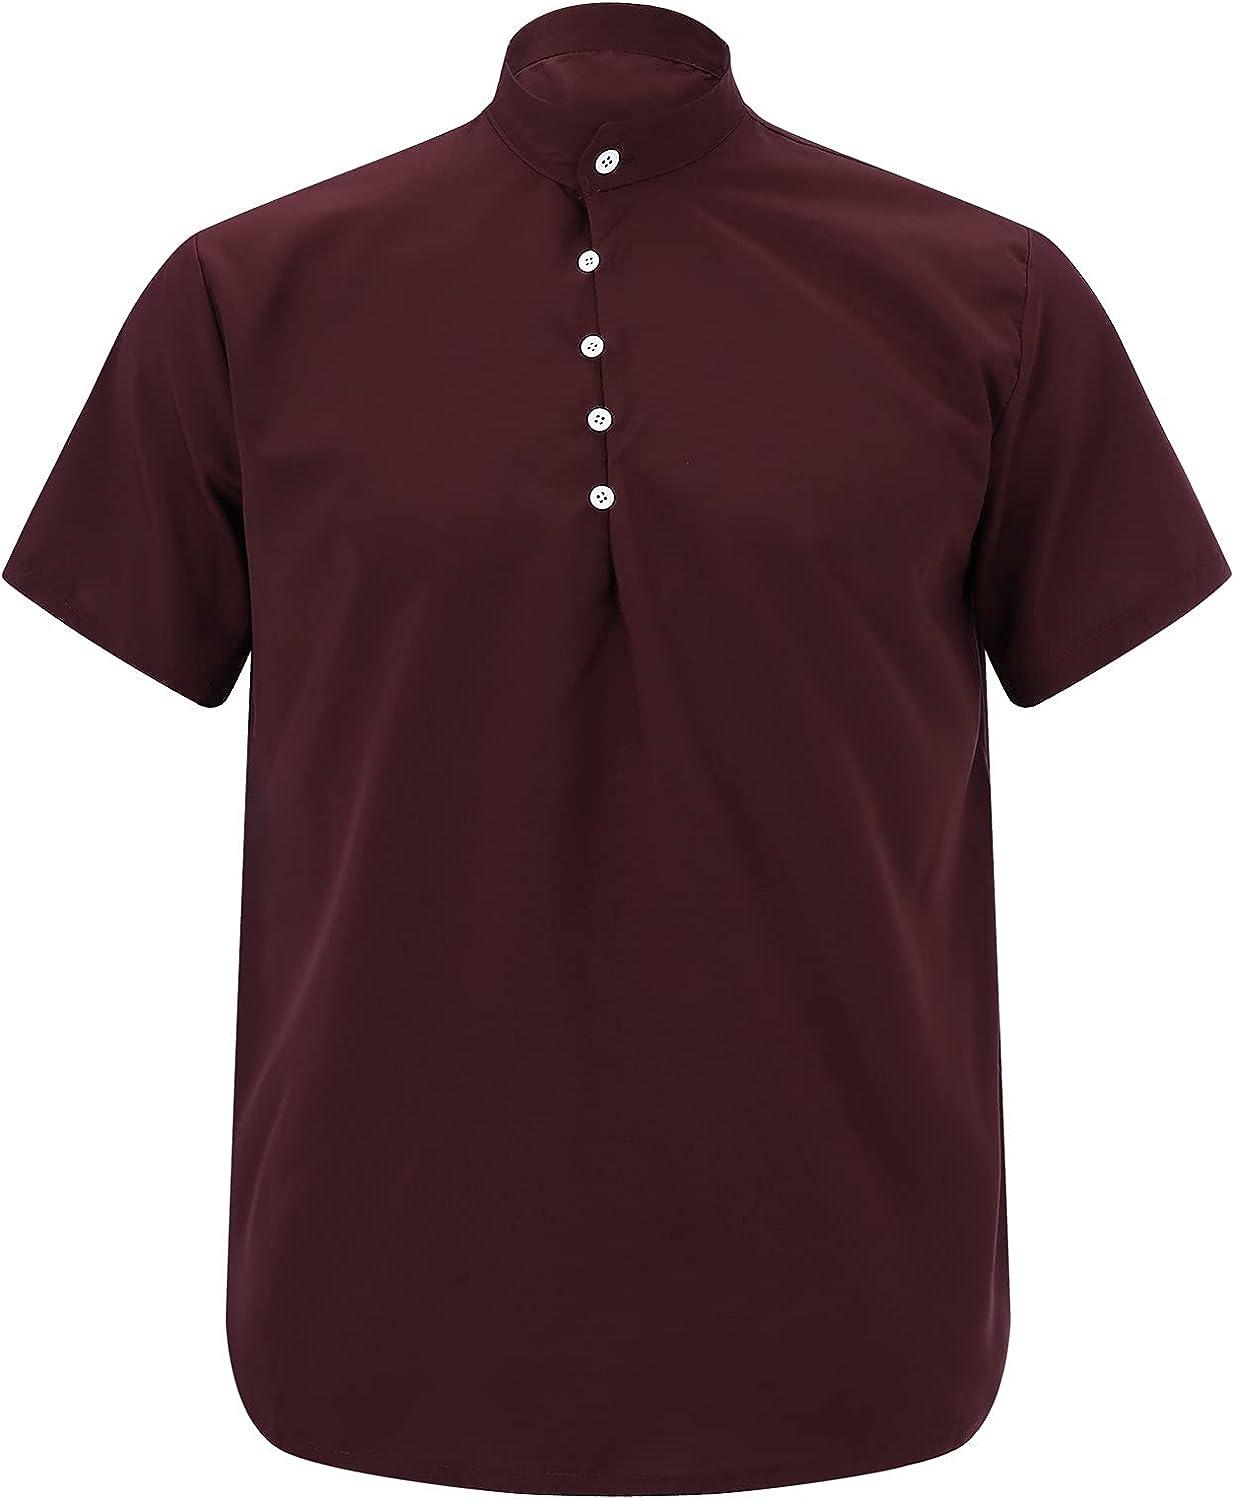 MIUERSA Men Summer Thin T-Shirt Casual Cool Ice Silk Regular-Fit Button  Stand Collar Short Sleeve Shirts Tops Blouses Wine Medium